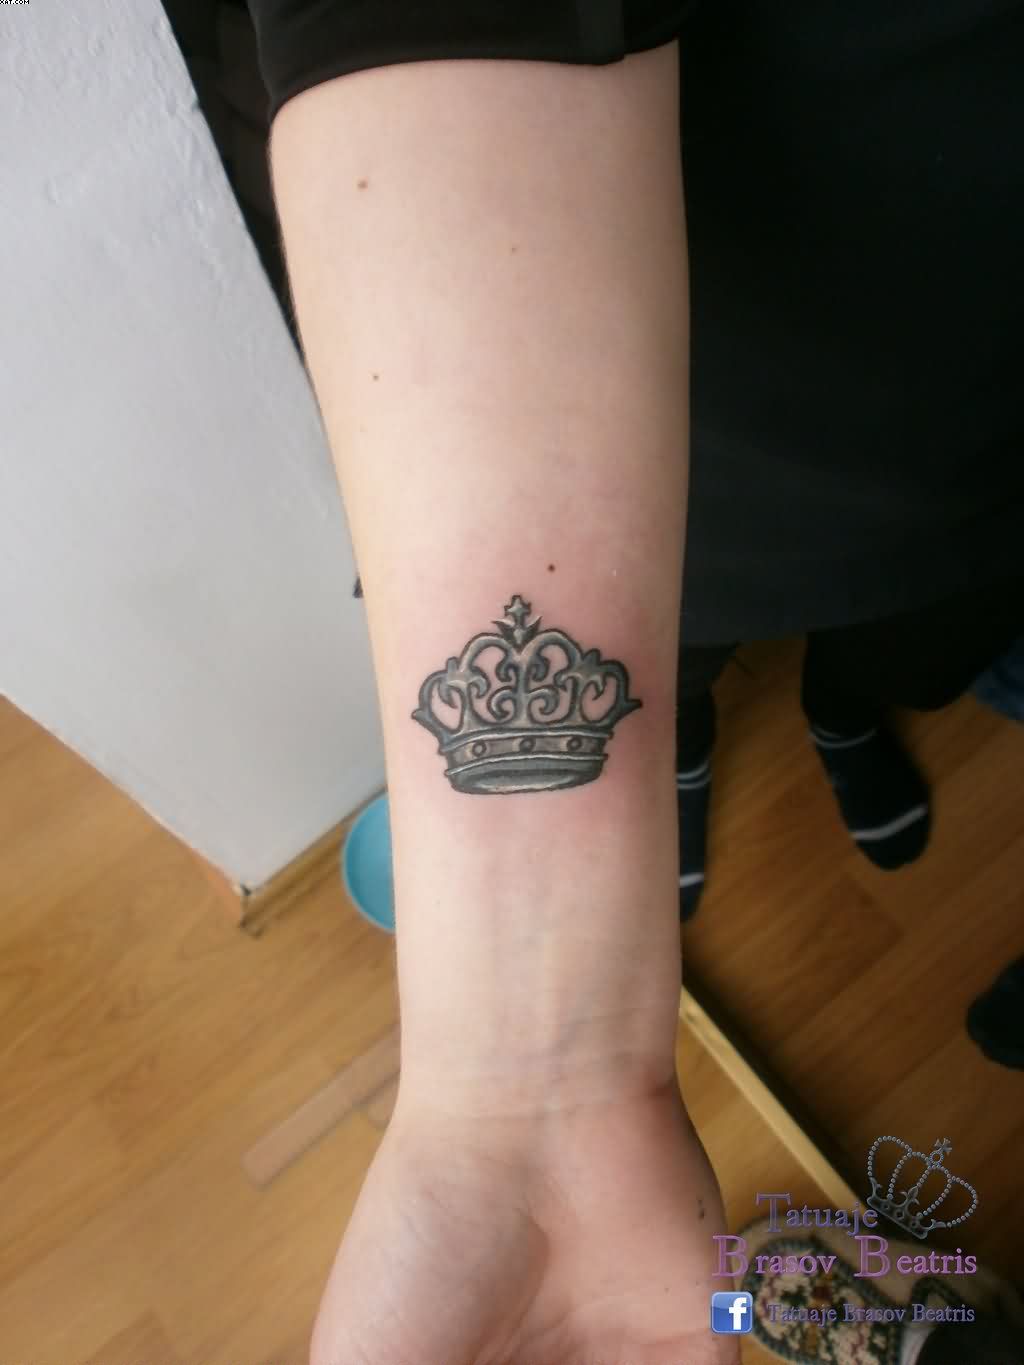 Right Wrist Black And Grey Crown Tattoo